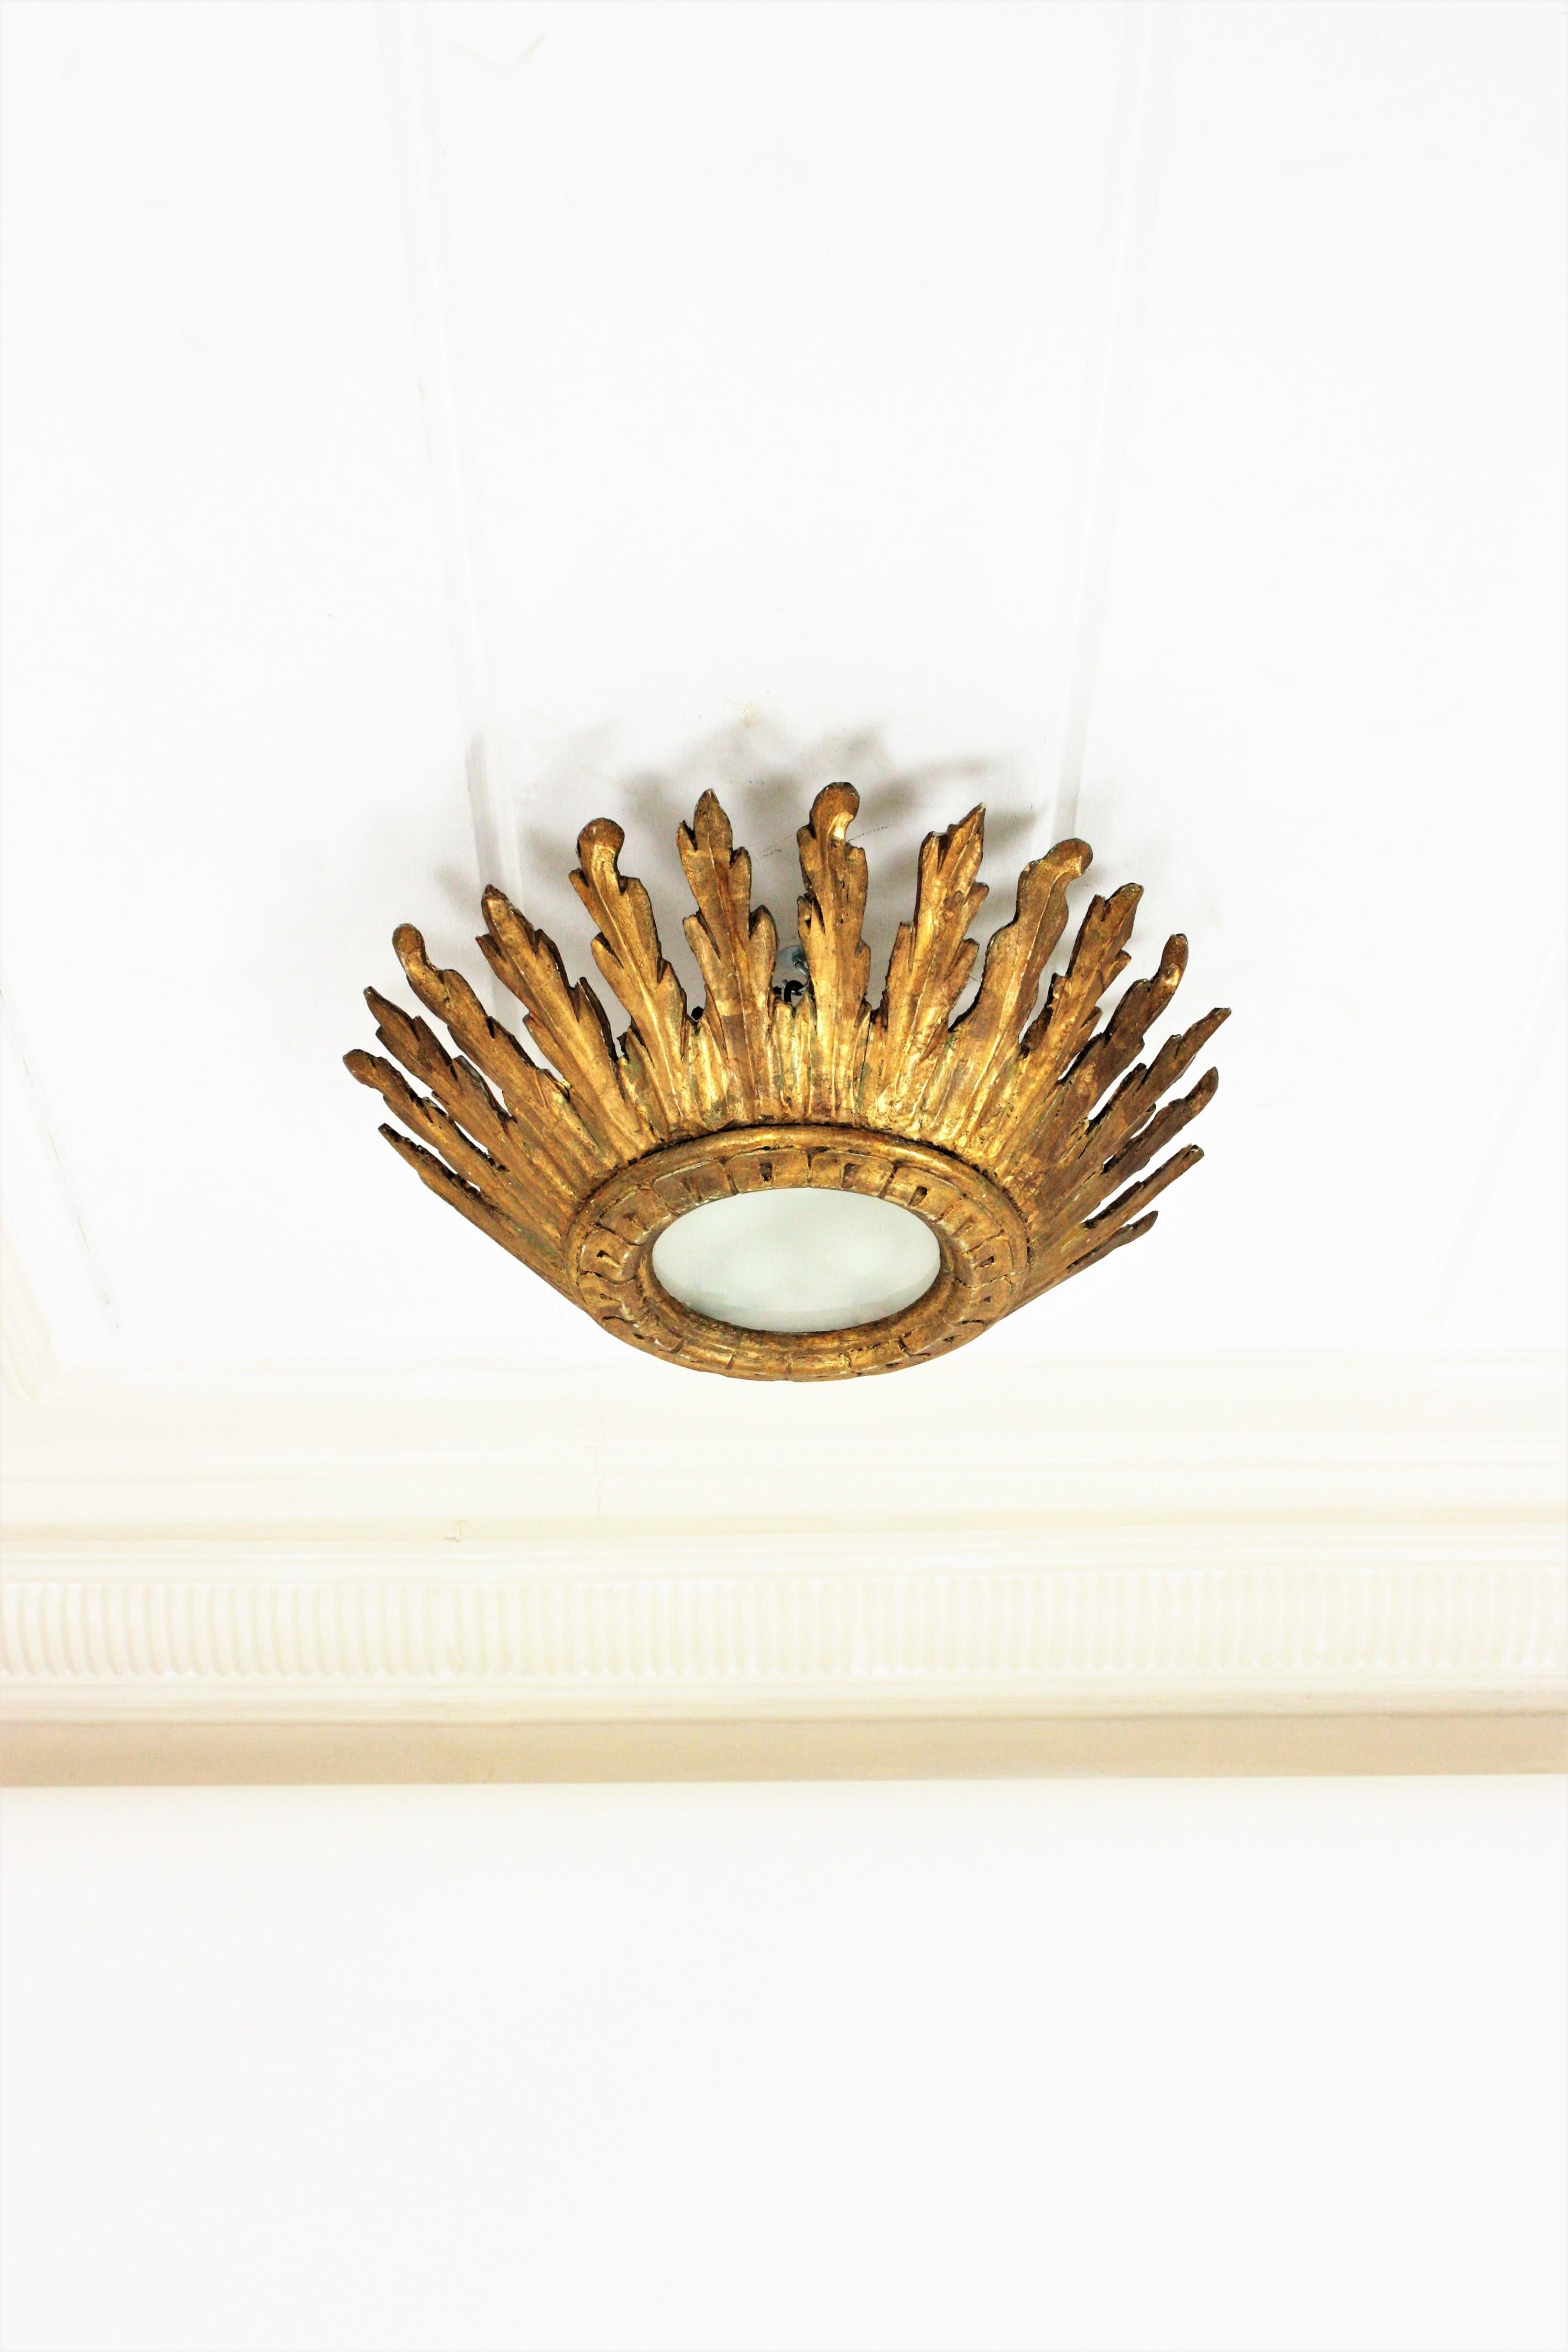 Carved Sunburst Crown Ceiling Flush Mount Light Fixture in Giltwood, Spanish Baroque For Sale